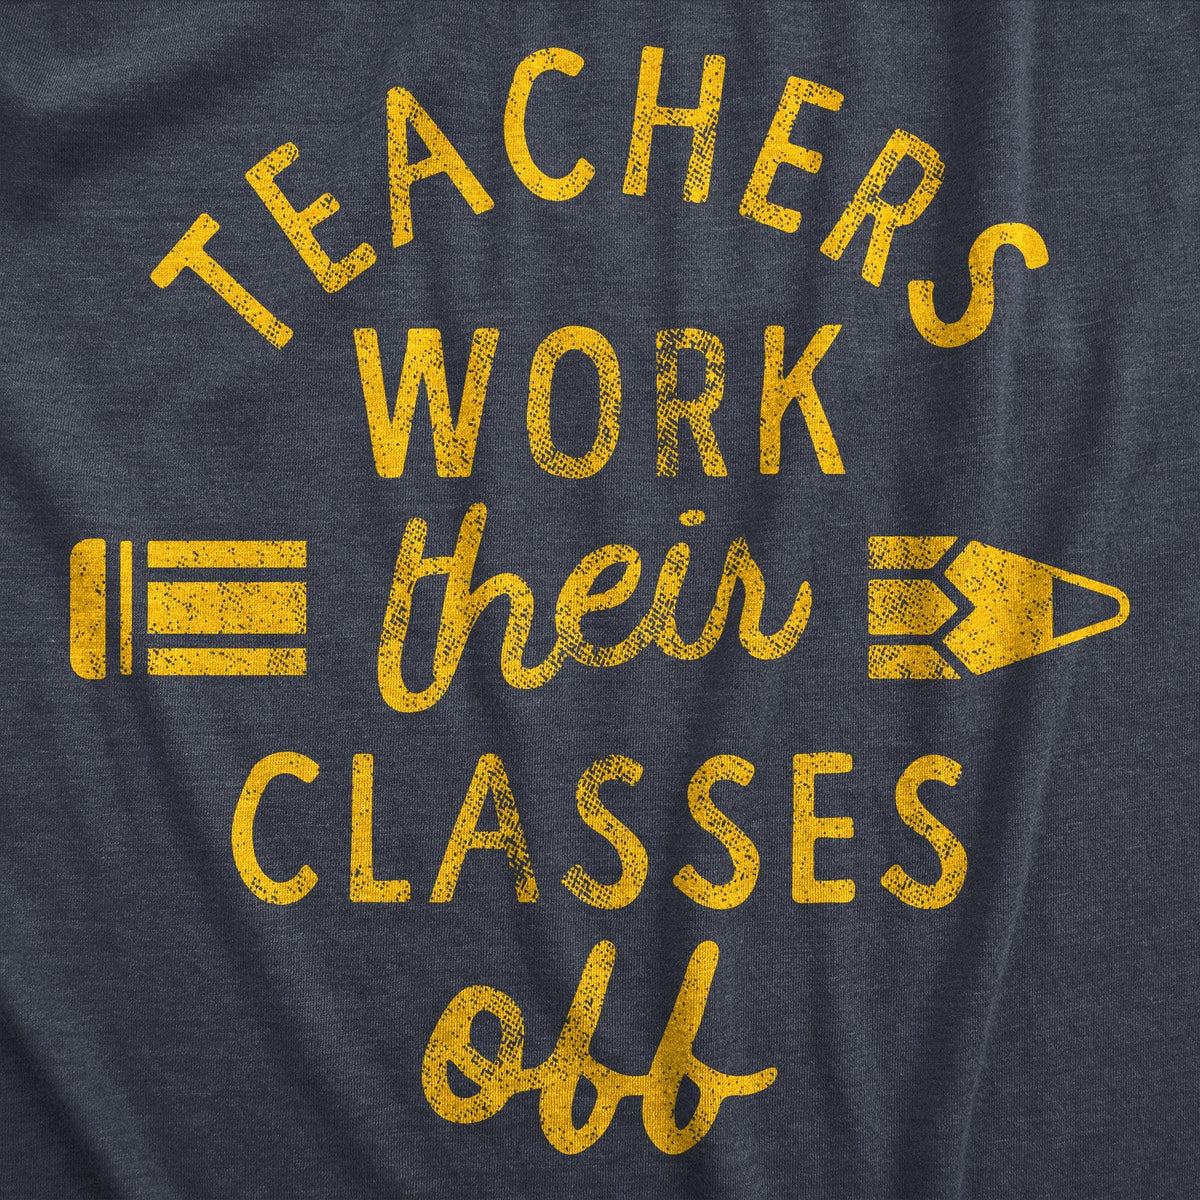 Teachers Work Their Classes Off Men&#39;s Tshirt  -  Crazy Dog T-Shirts